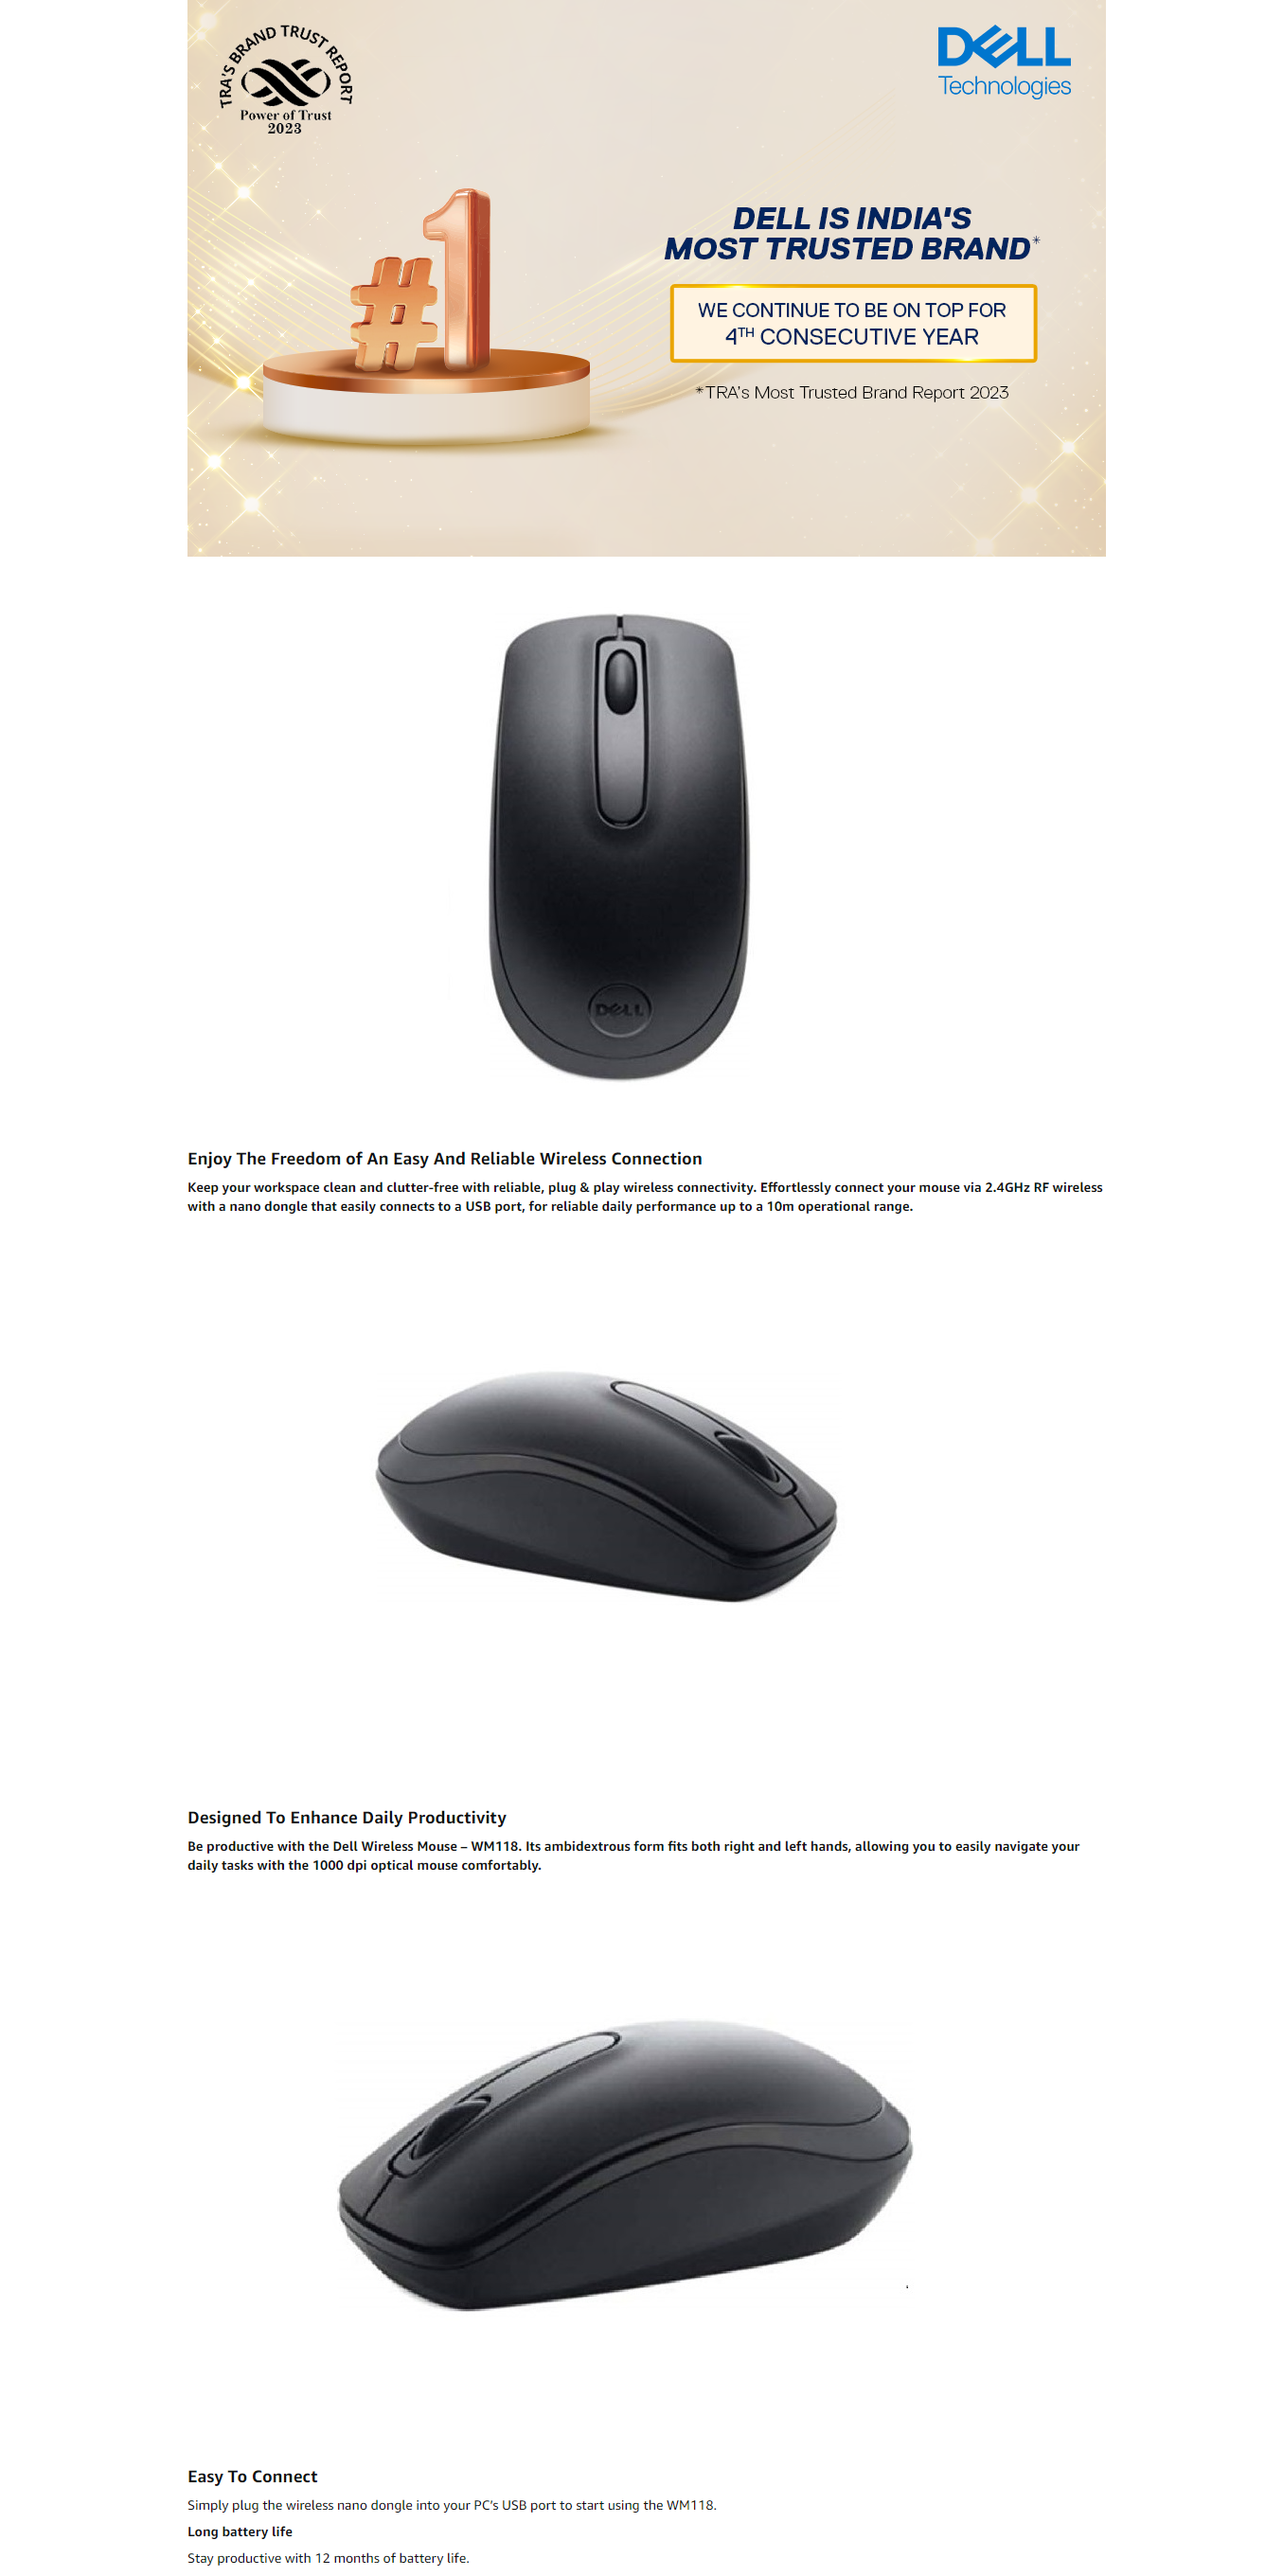 Dell WM118 Wireless Optical Performance Mouse (1000 dpi, Ambidextrous Design, DELLWM118, Black)